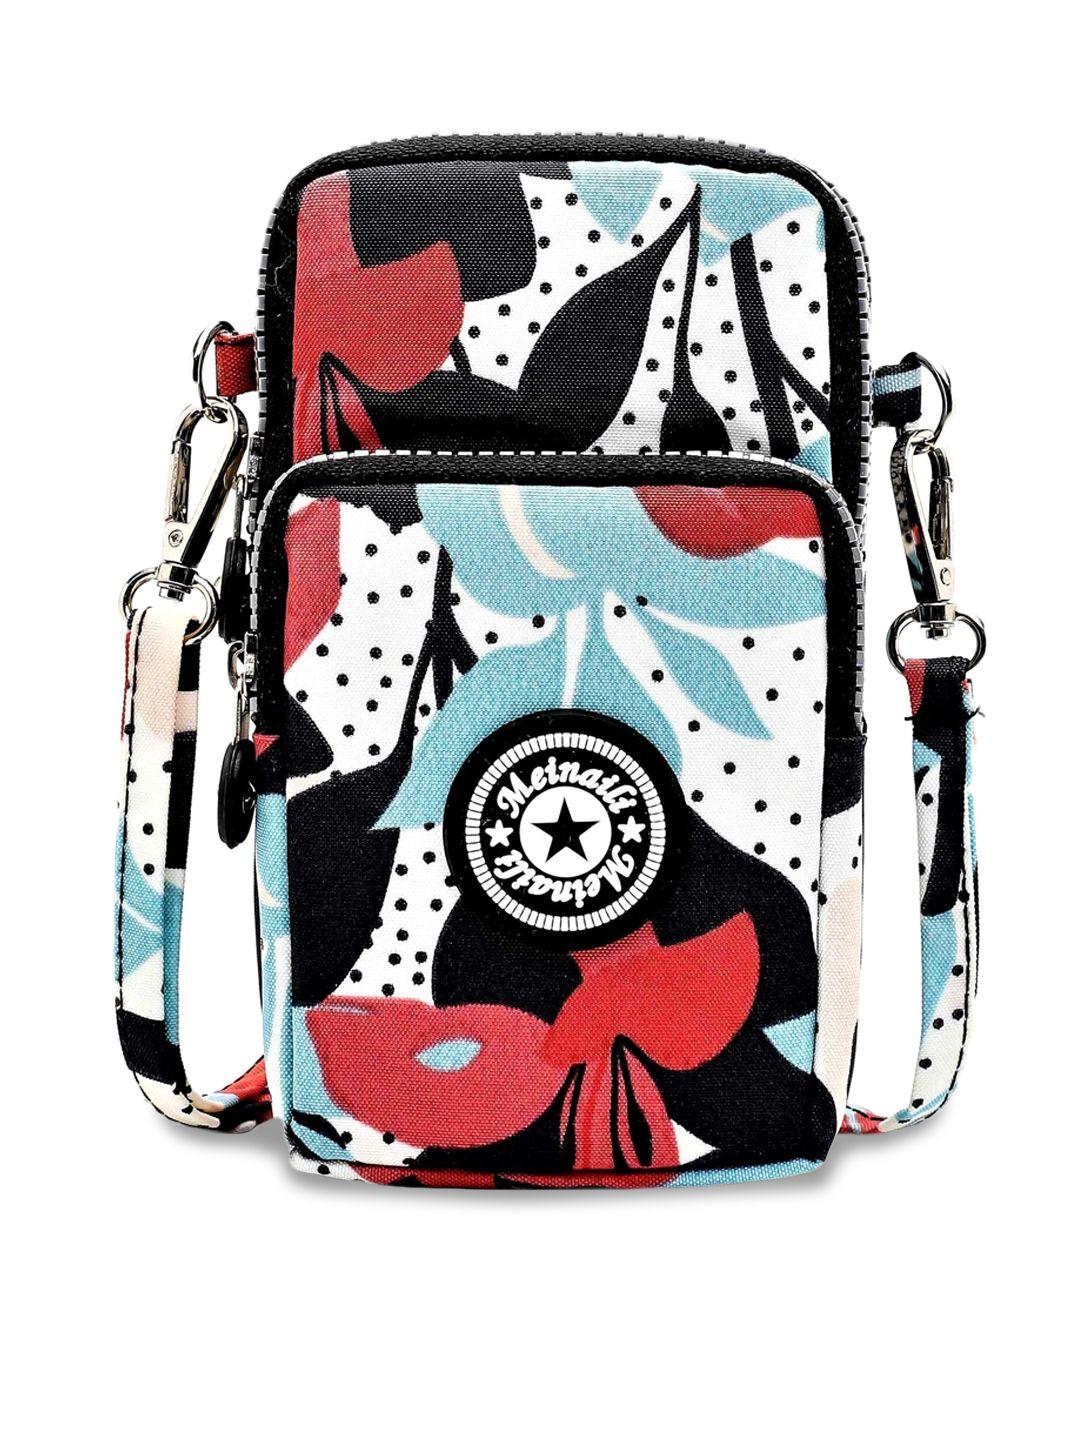 diva dale white & red printed phone holder multi-pockets swagger sling bag